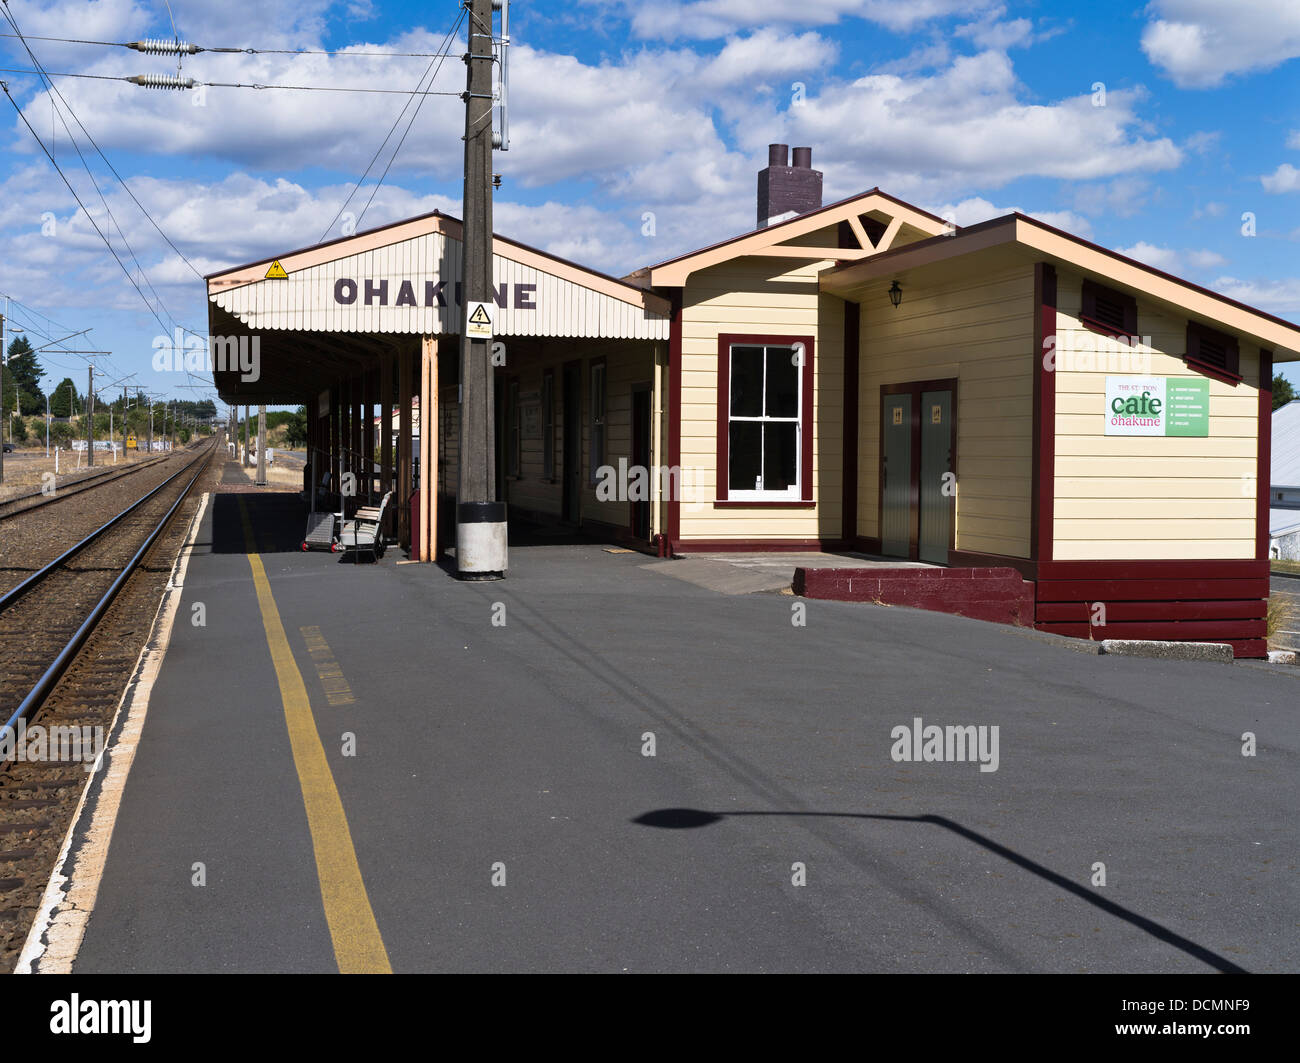 dh Ohakune railway station OHAKUNE NEW ZEALAND Railway platform and station buildings Stock Photo